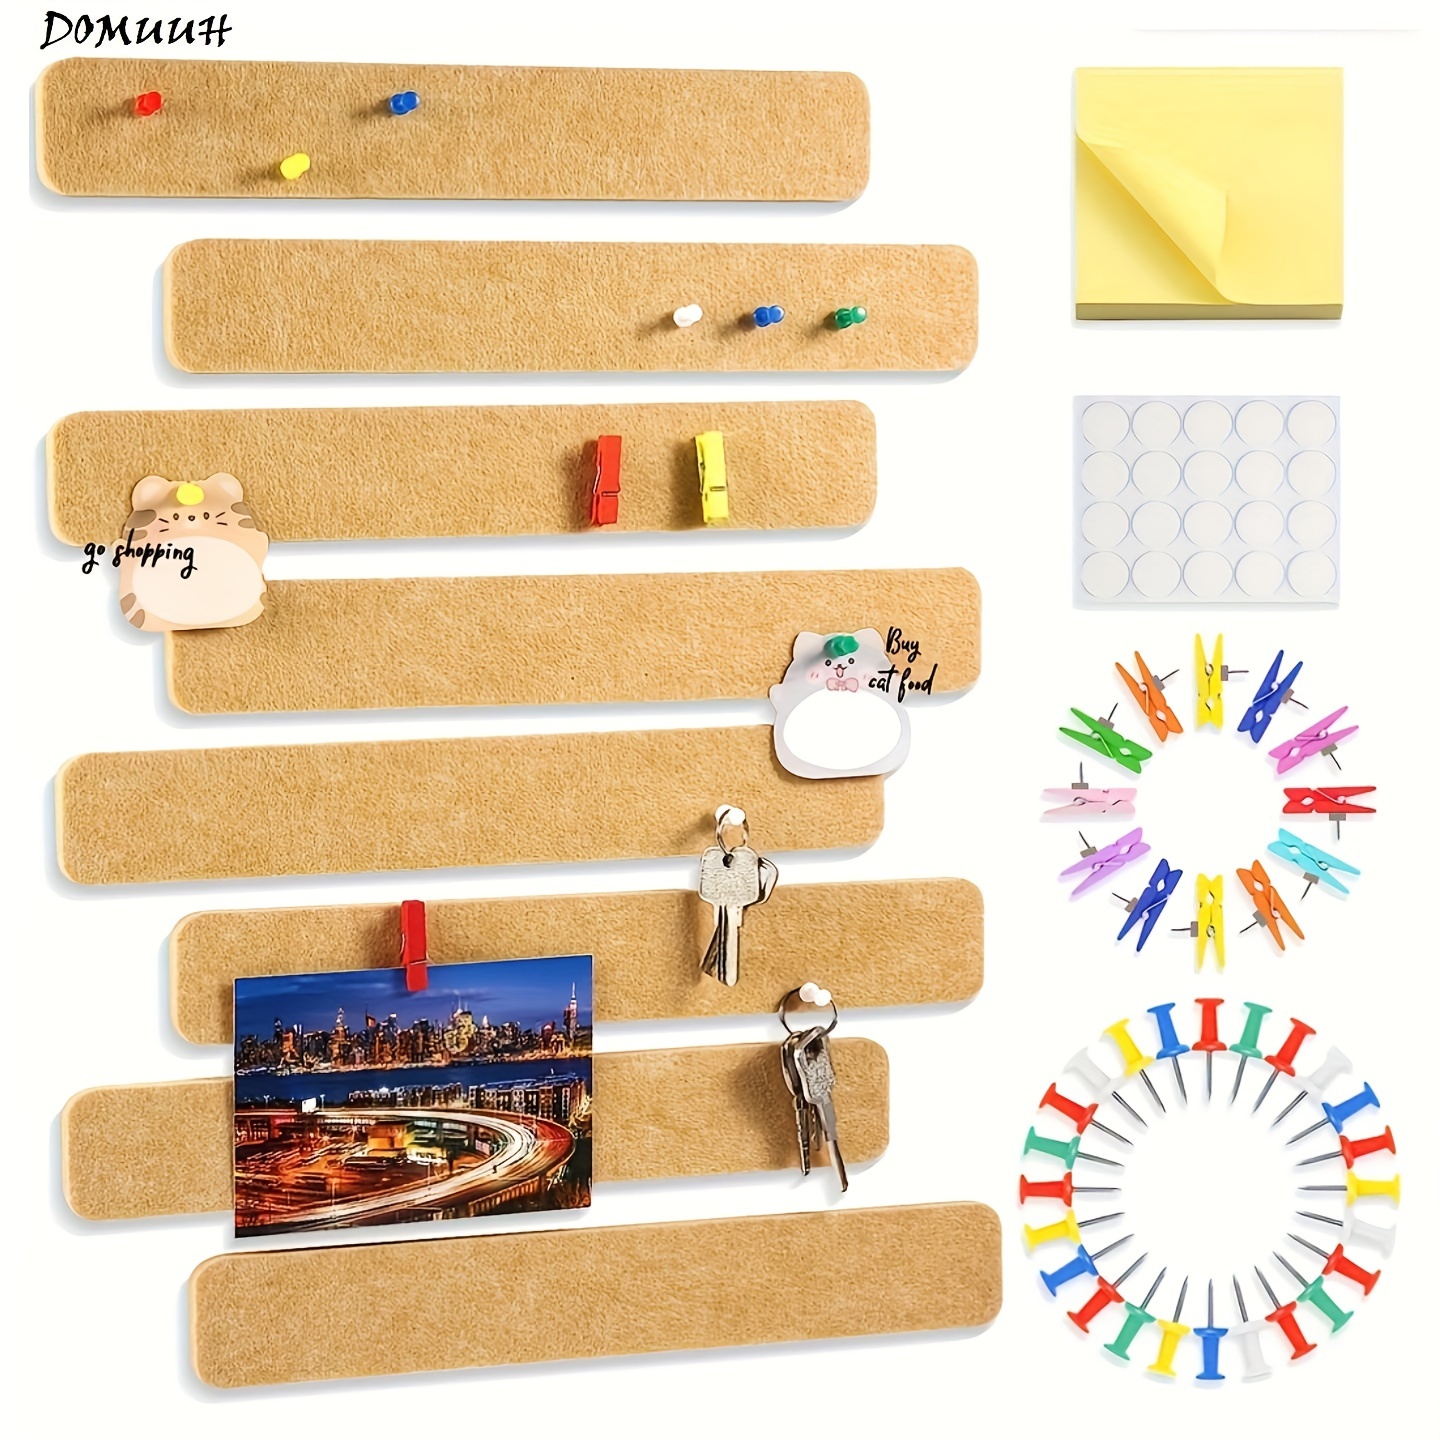 Trycooling Bulletin Board/Cork Board on The Desktop-Small Mini Hanging Tack Memo